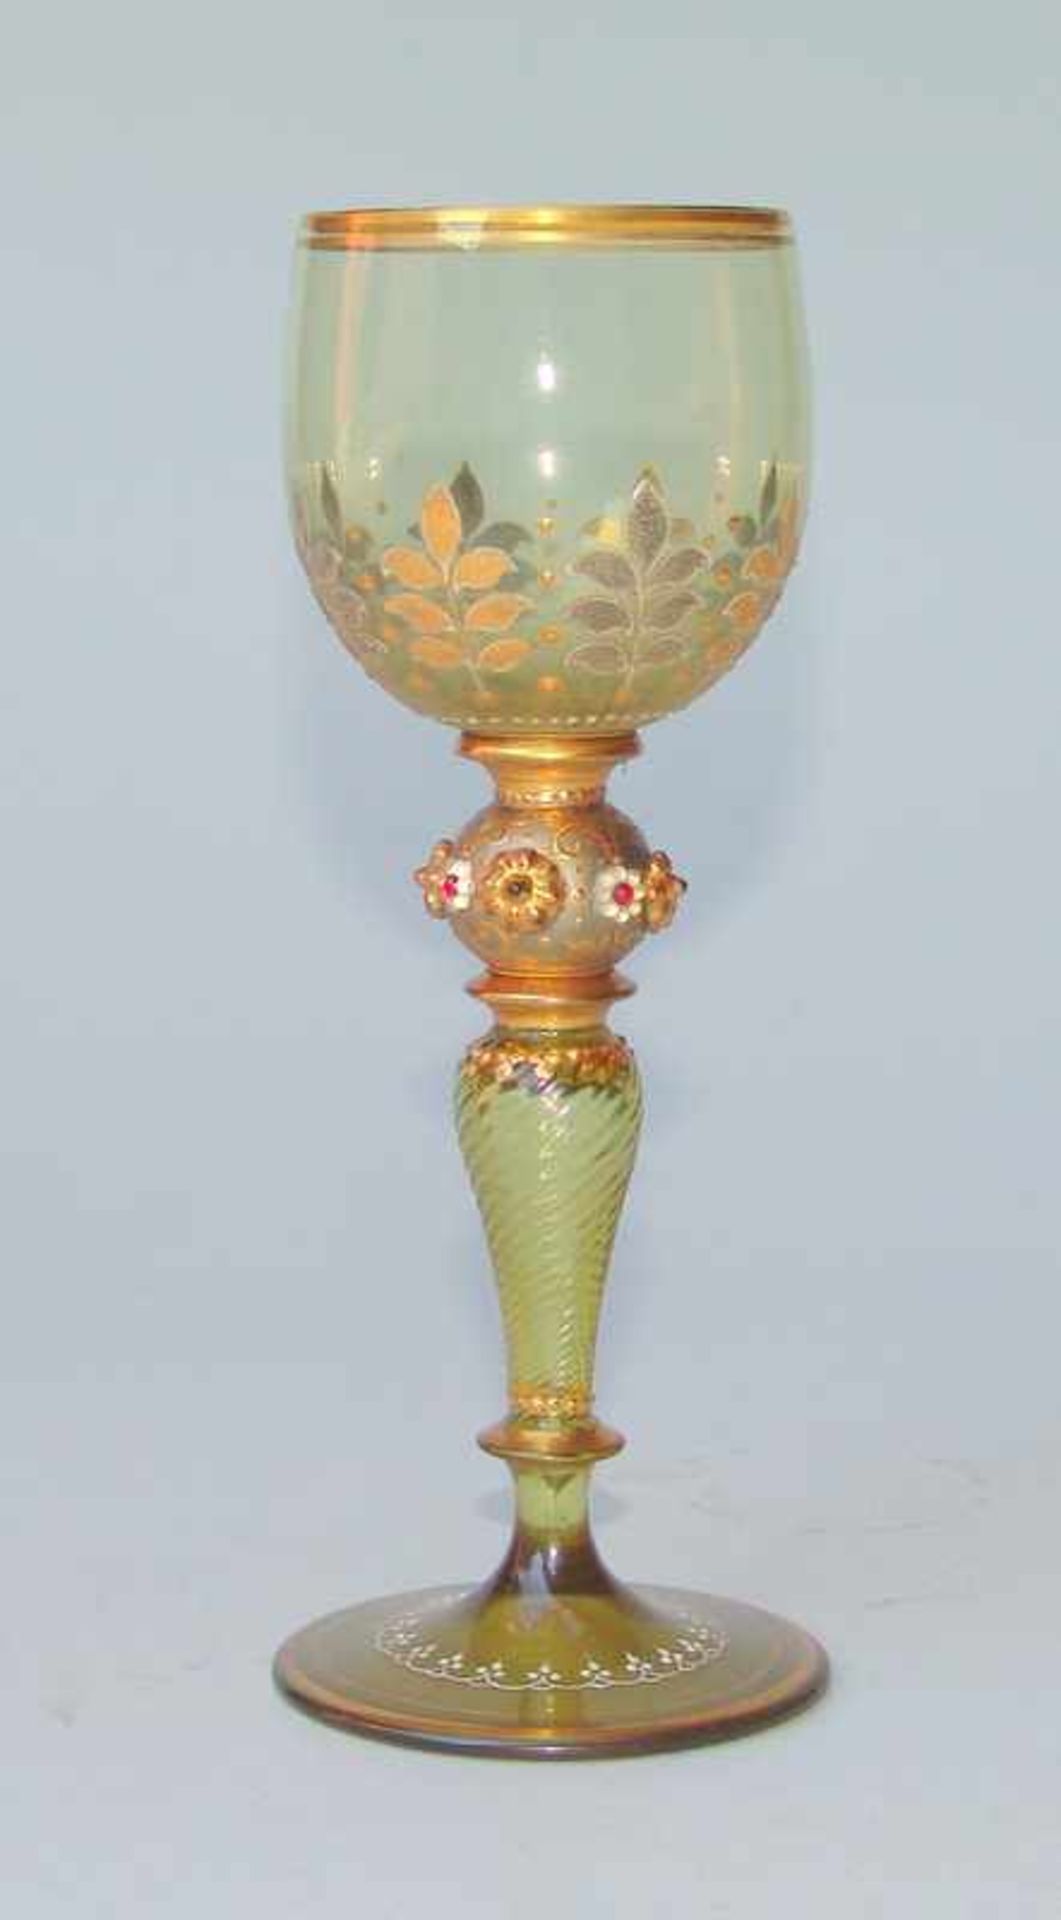 Theresienthal, Kristallglasmanufaktur: 3 Prunk-Gläser, um 1900 farbloses und hell-lindgrünes Glas